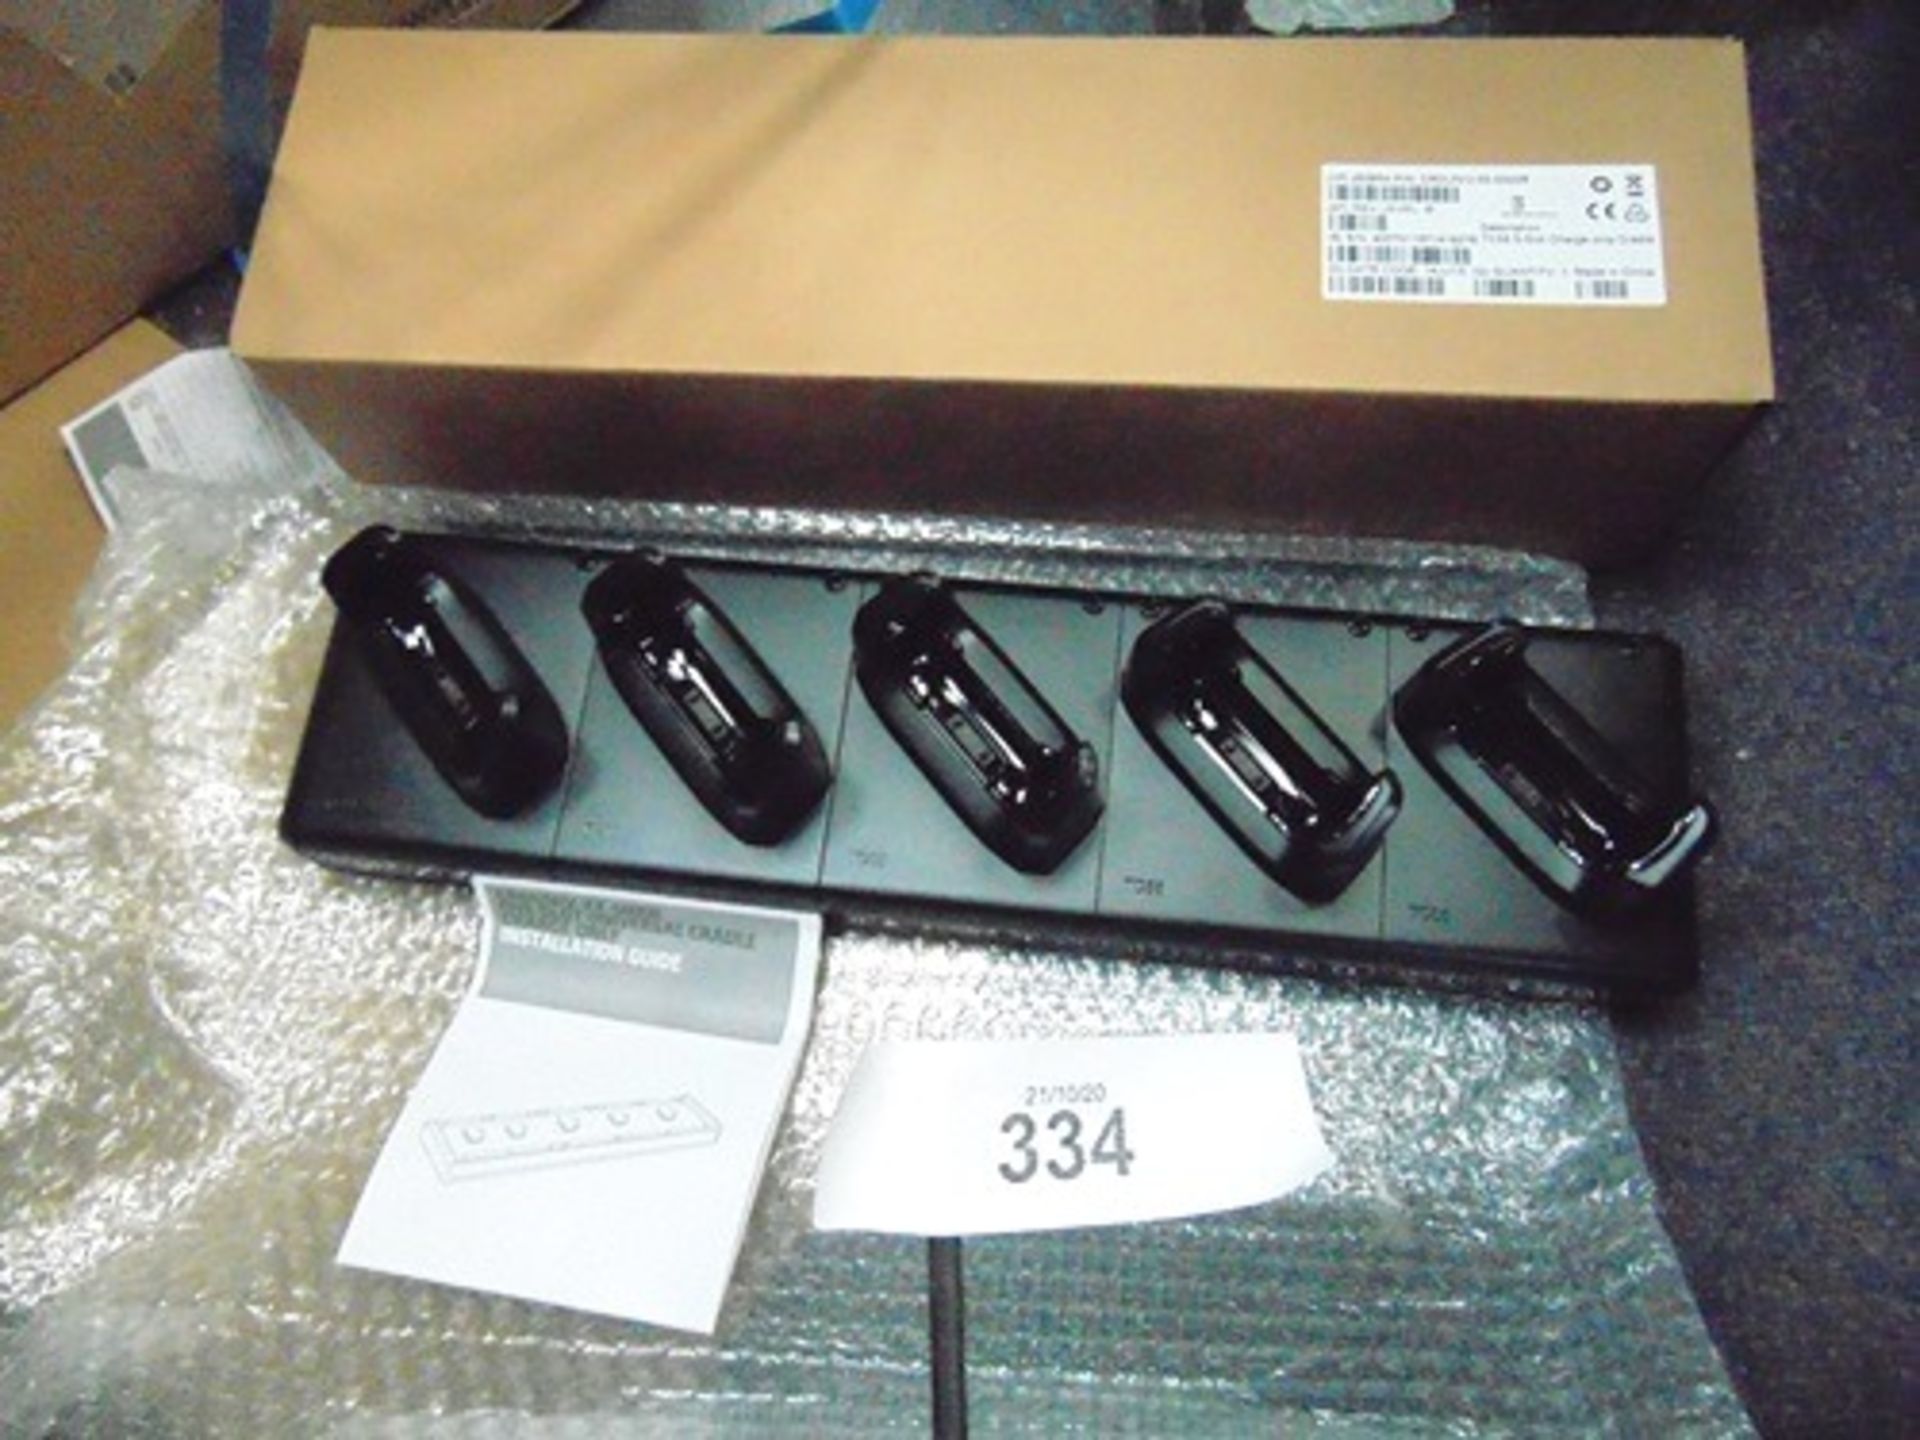 2 x Symbol/Zebra TC55 5 port charge cradles, model CRDUNIV-55-5000R - New in box (cabtable3)